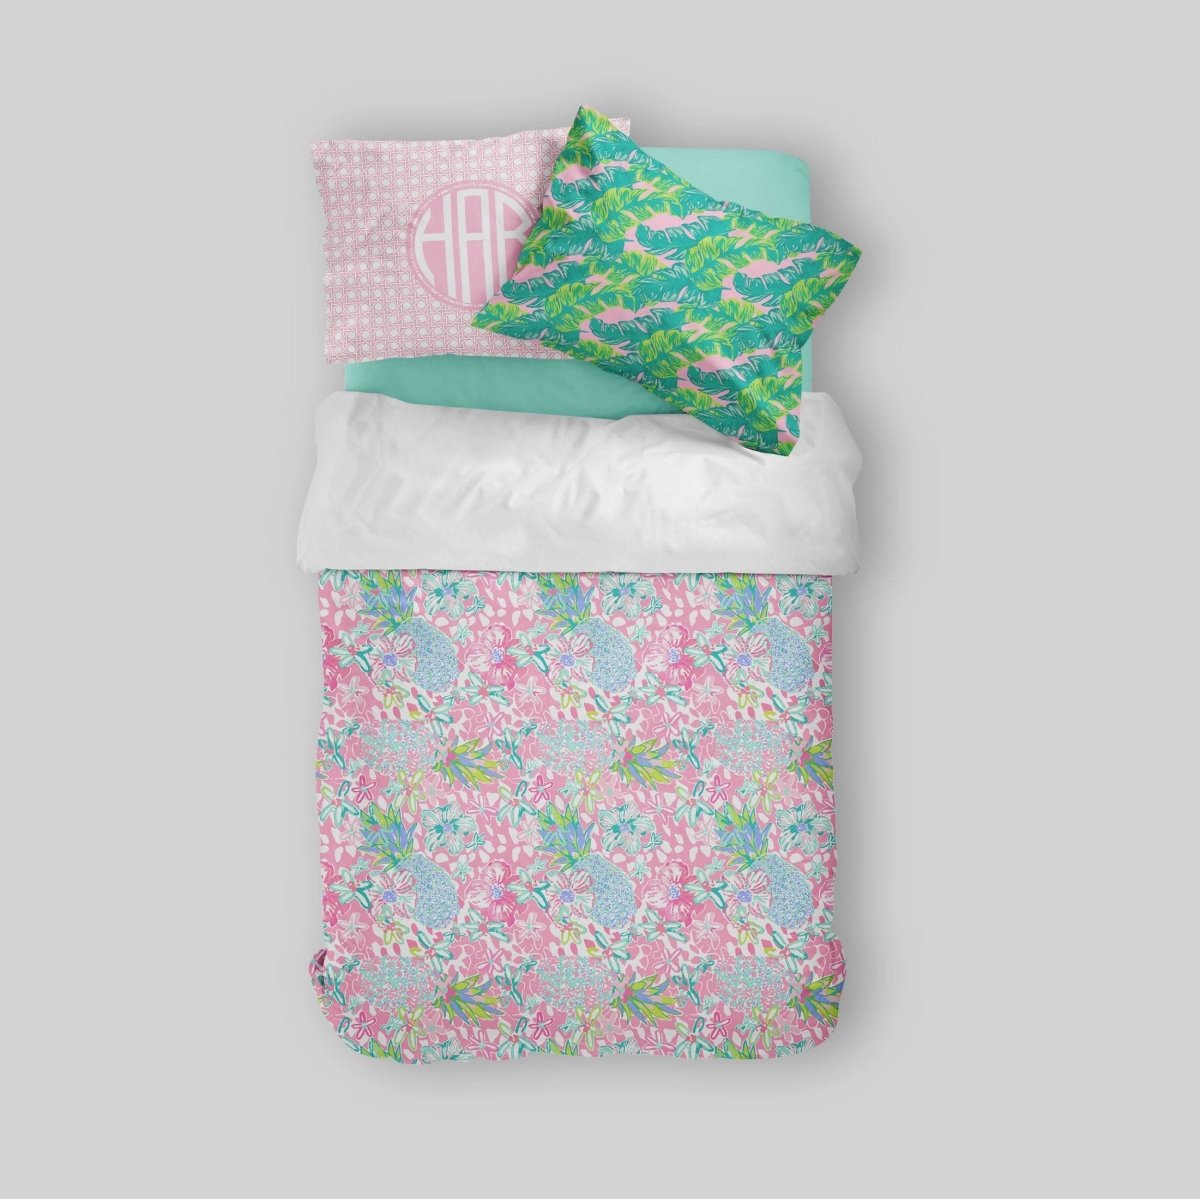 Preppy Summer Kids Bedding Set (Comforter or Duvet Cover) - gender_girl, Preppy Summer, text